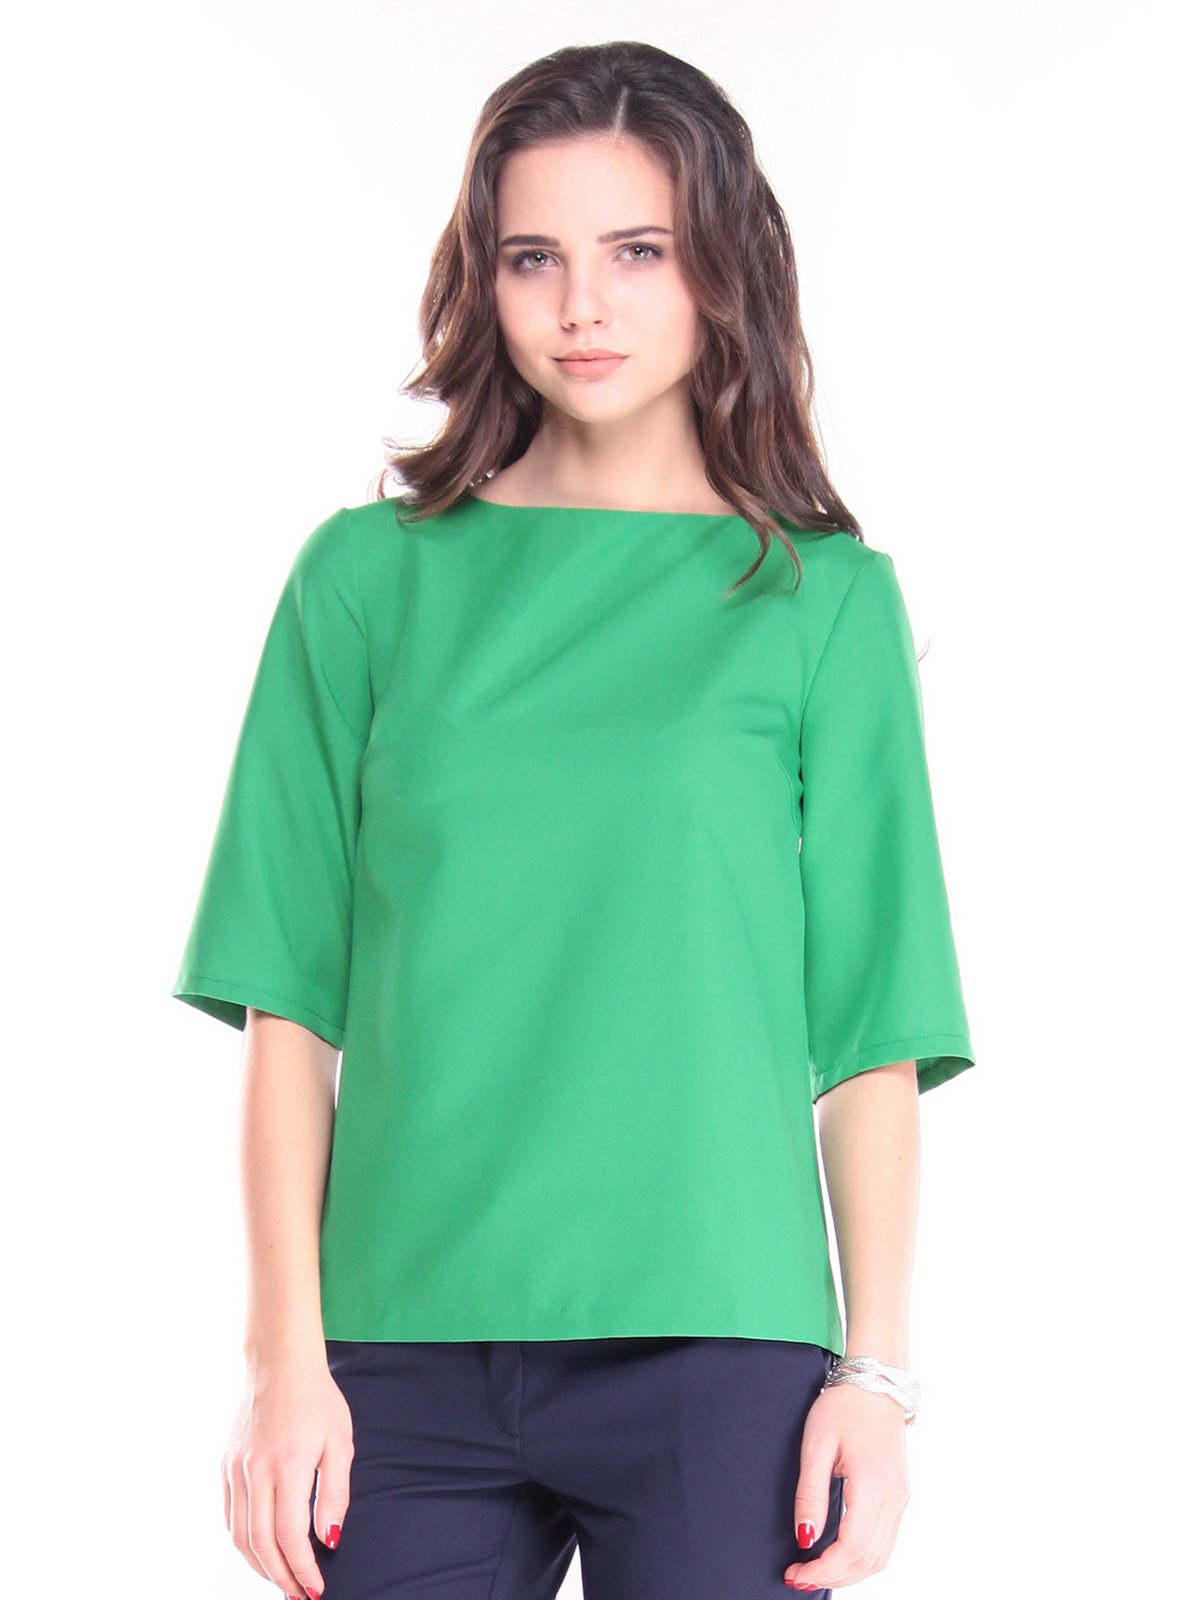 Termit блузка зеленая